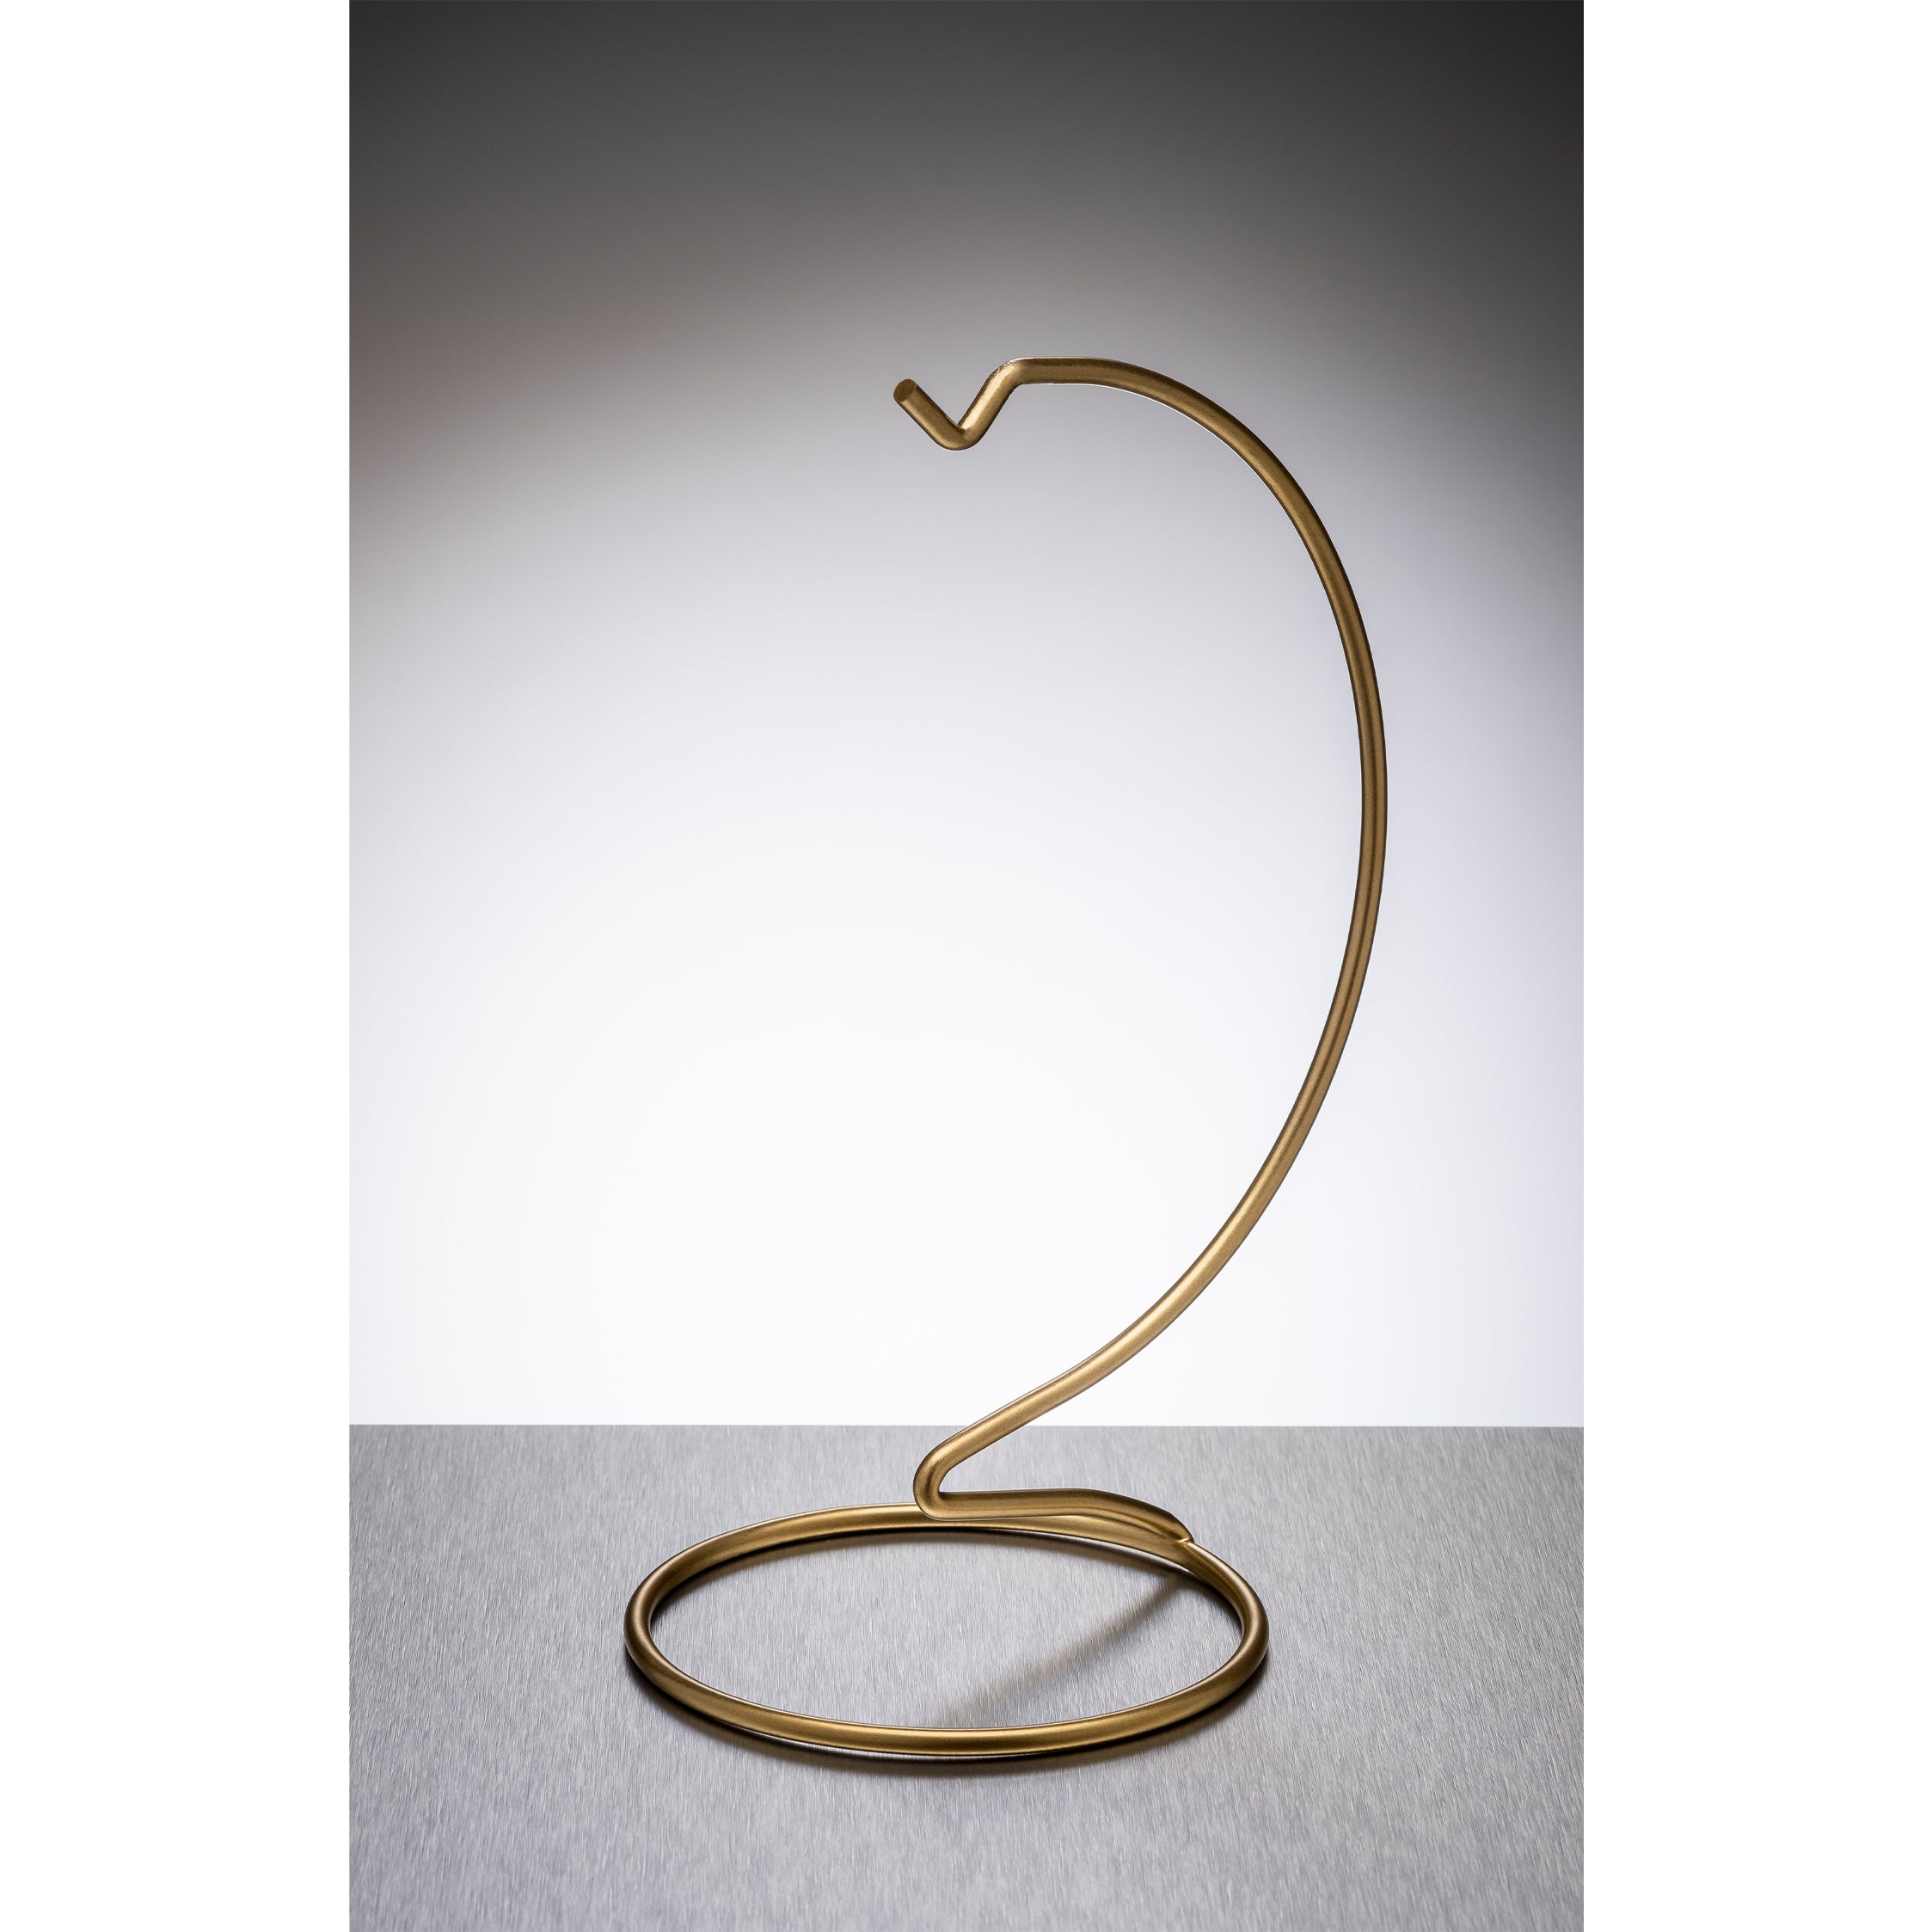 Gold Metal Ornament Stand - Medium - Aspire Art Glass